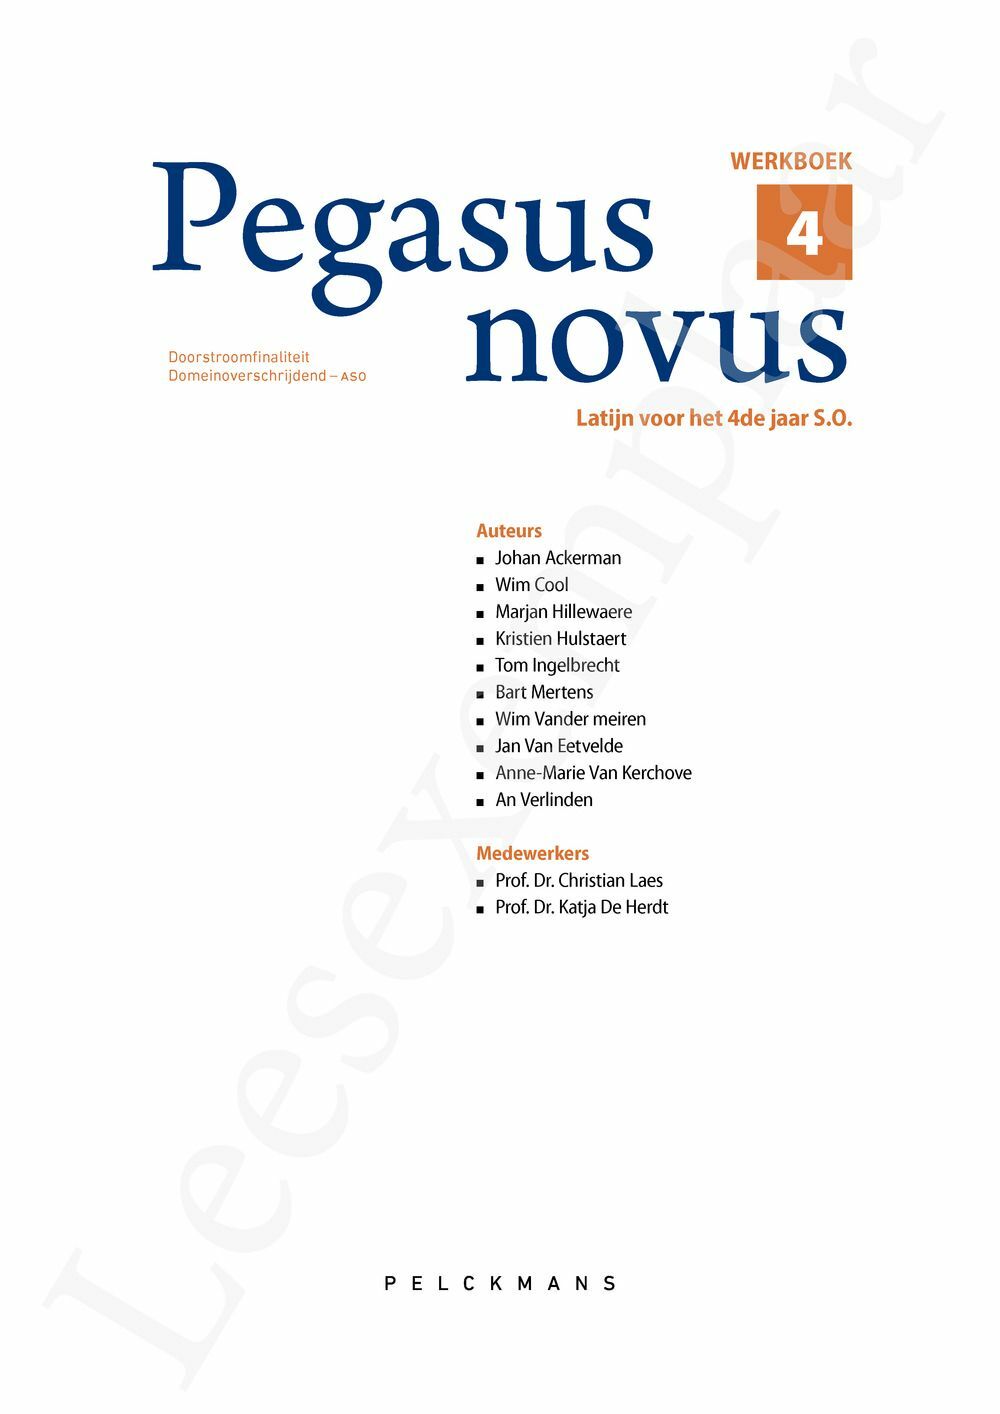 Preview: Pegasus novus 4 Werkboek (incl. Pelckmans Portaal)